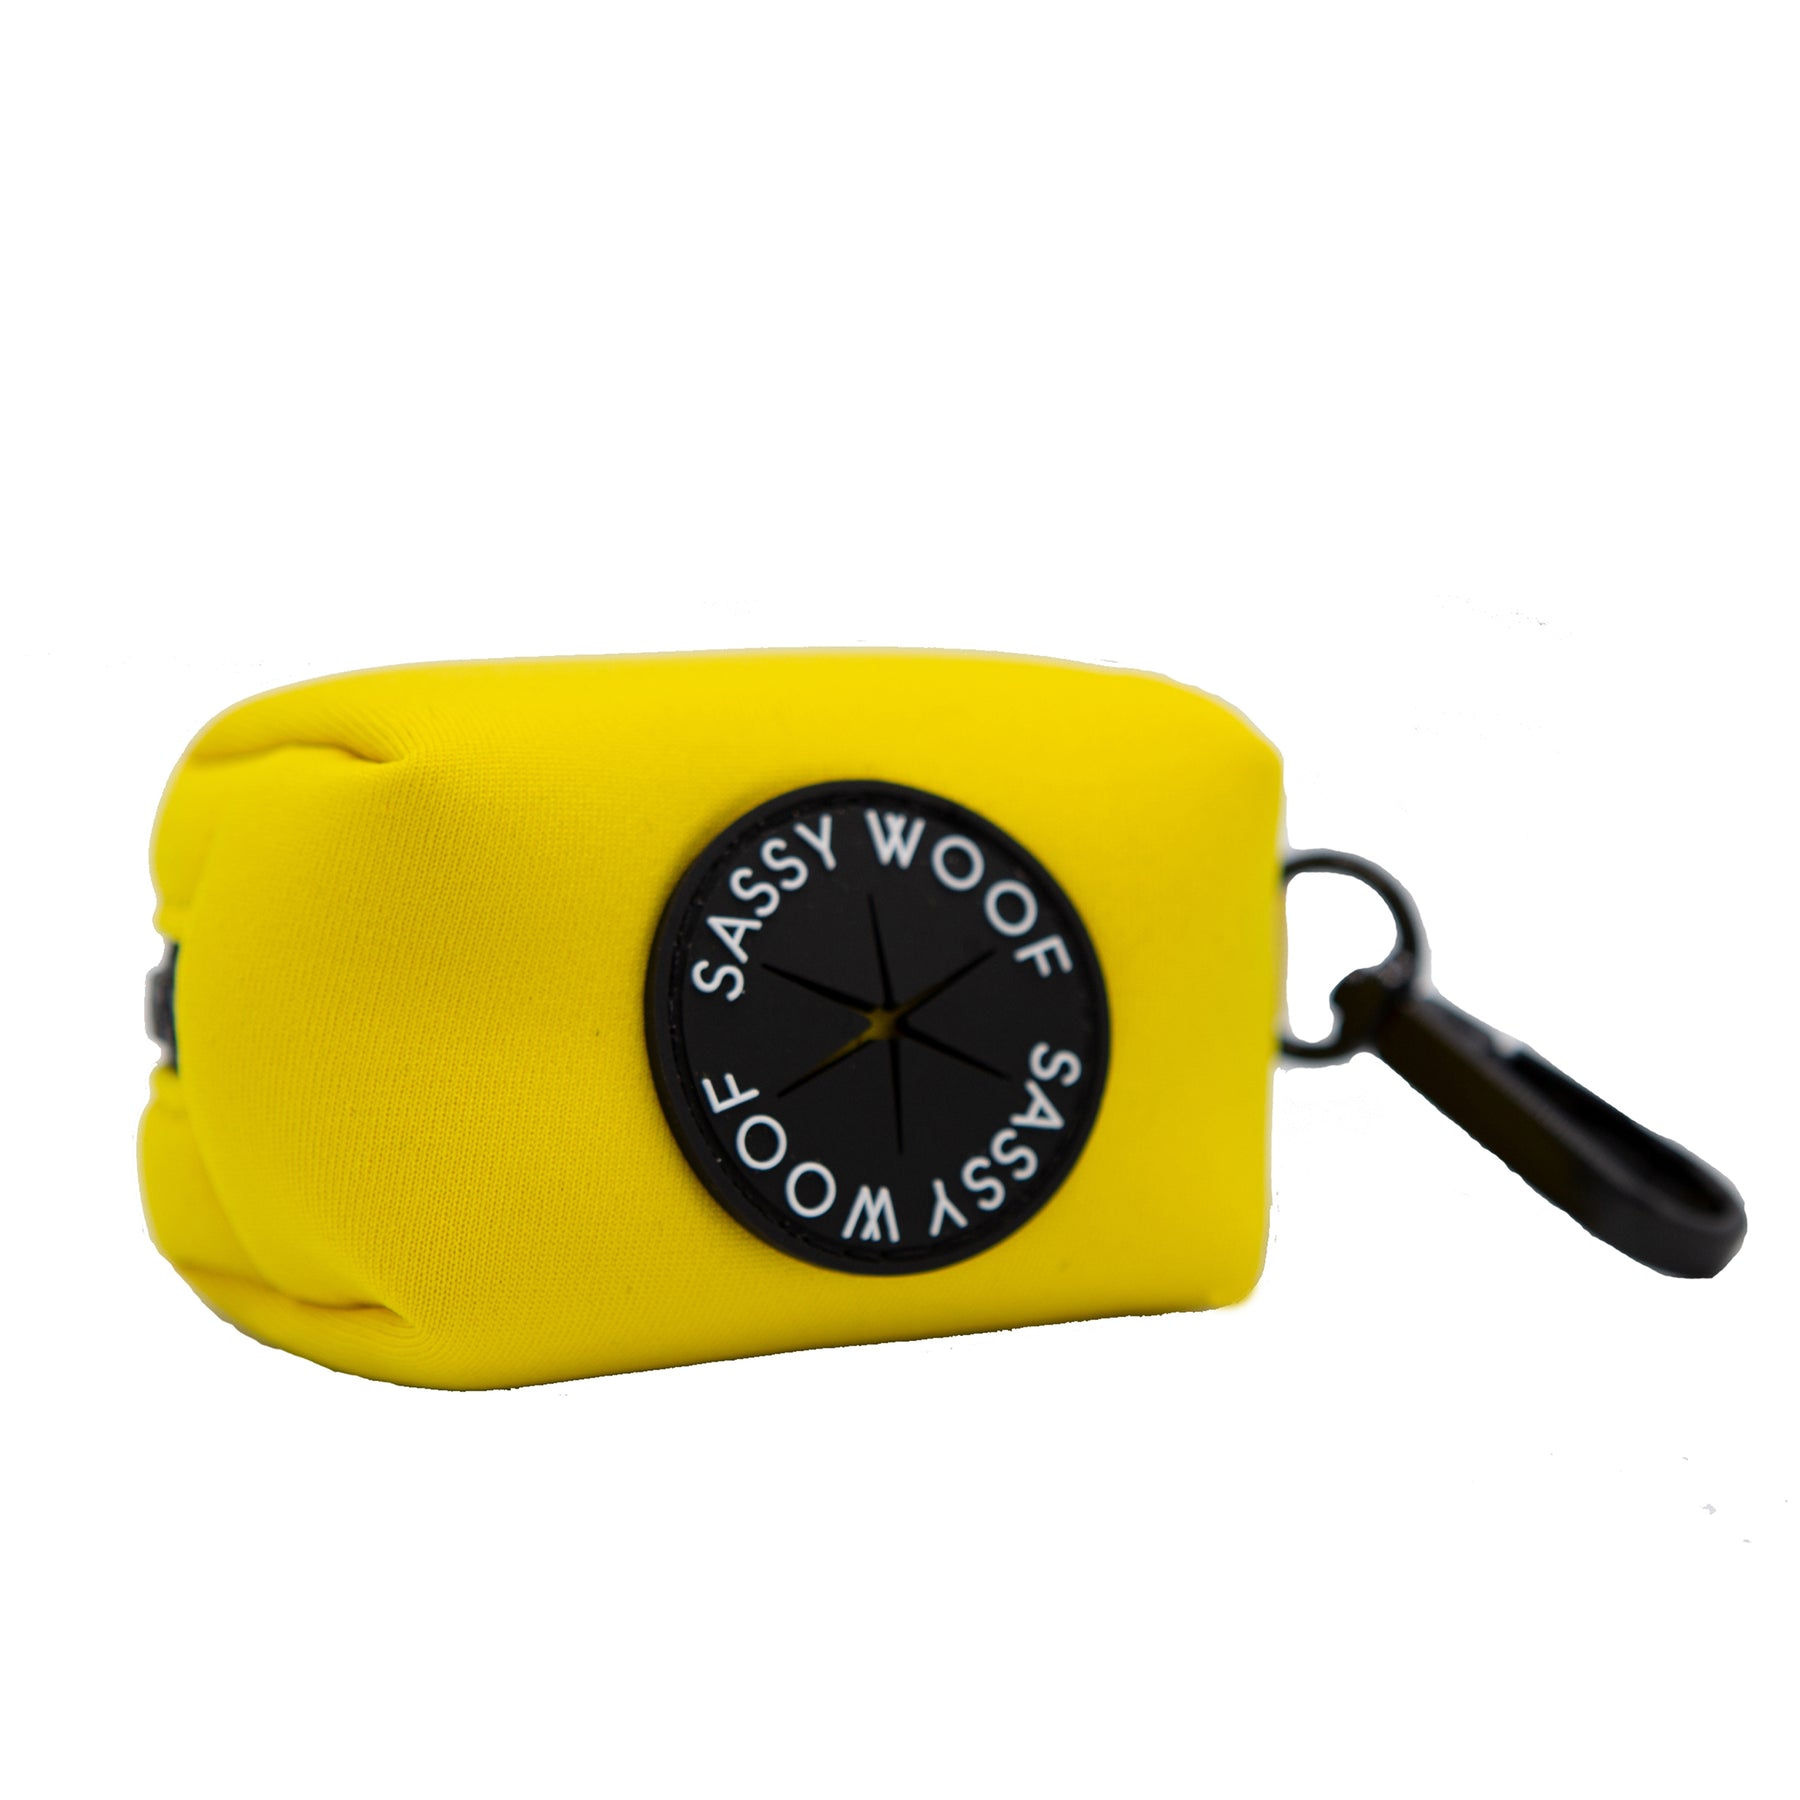 Dog Waste Bag Holder - Neon Yellow